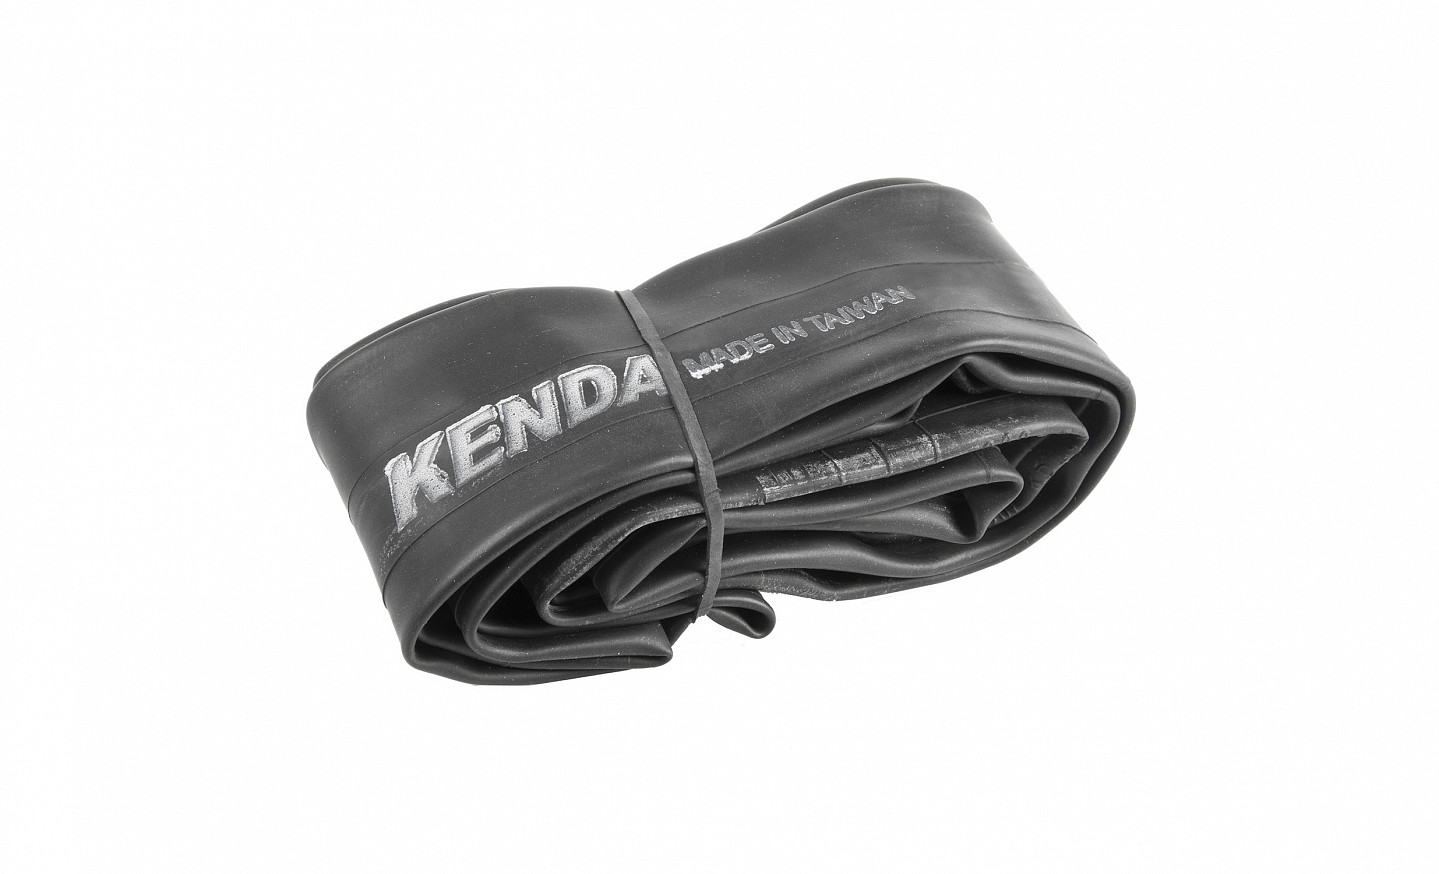 KENDA 16 x 1.75 - 2.125" bicycle tube